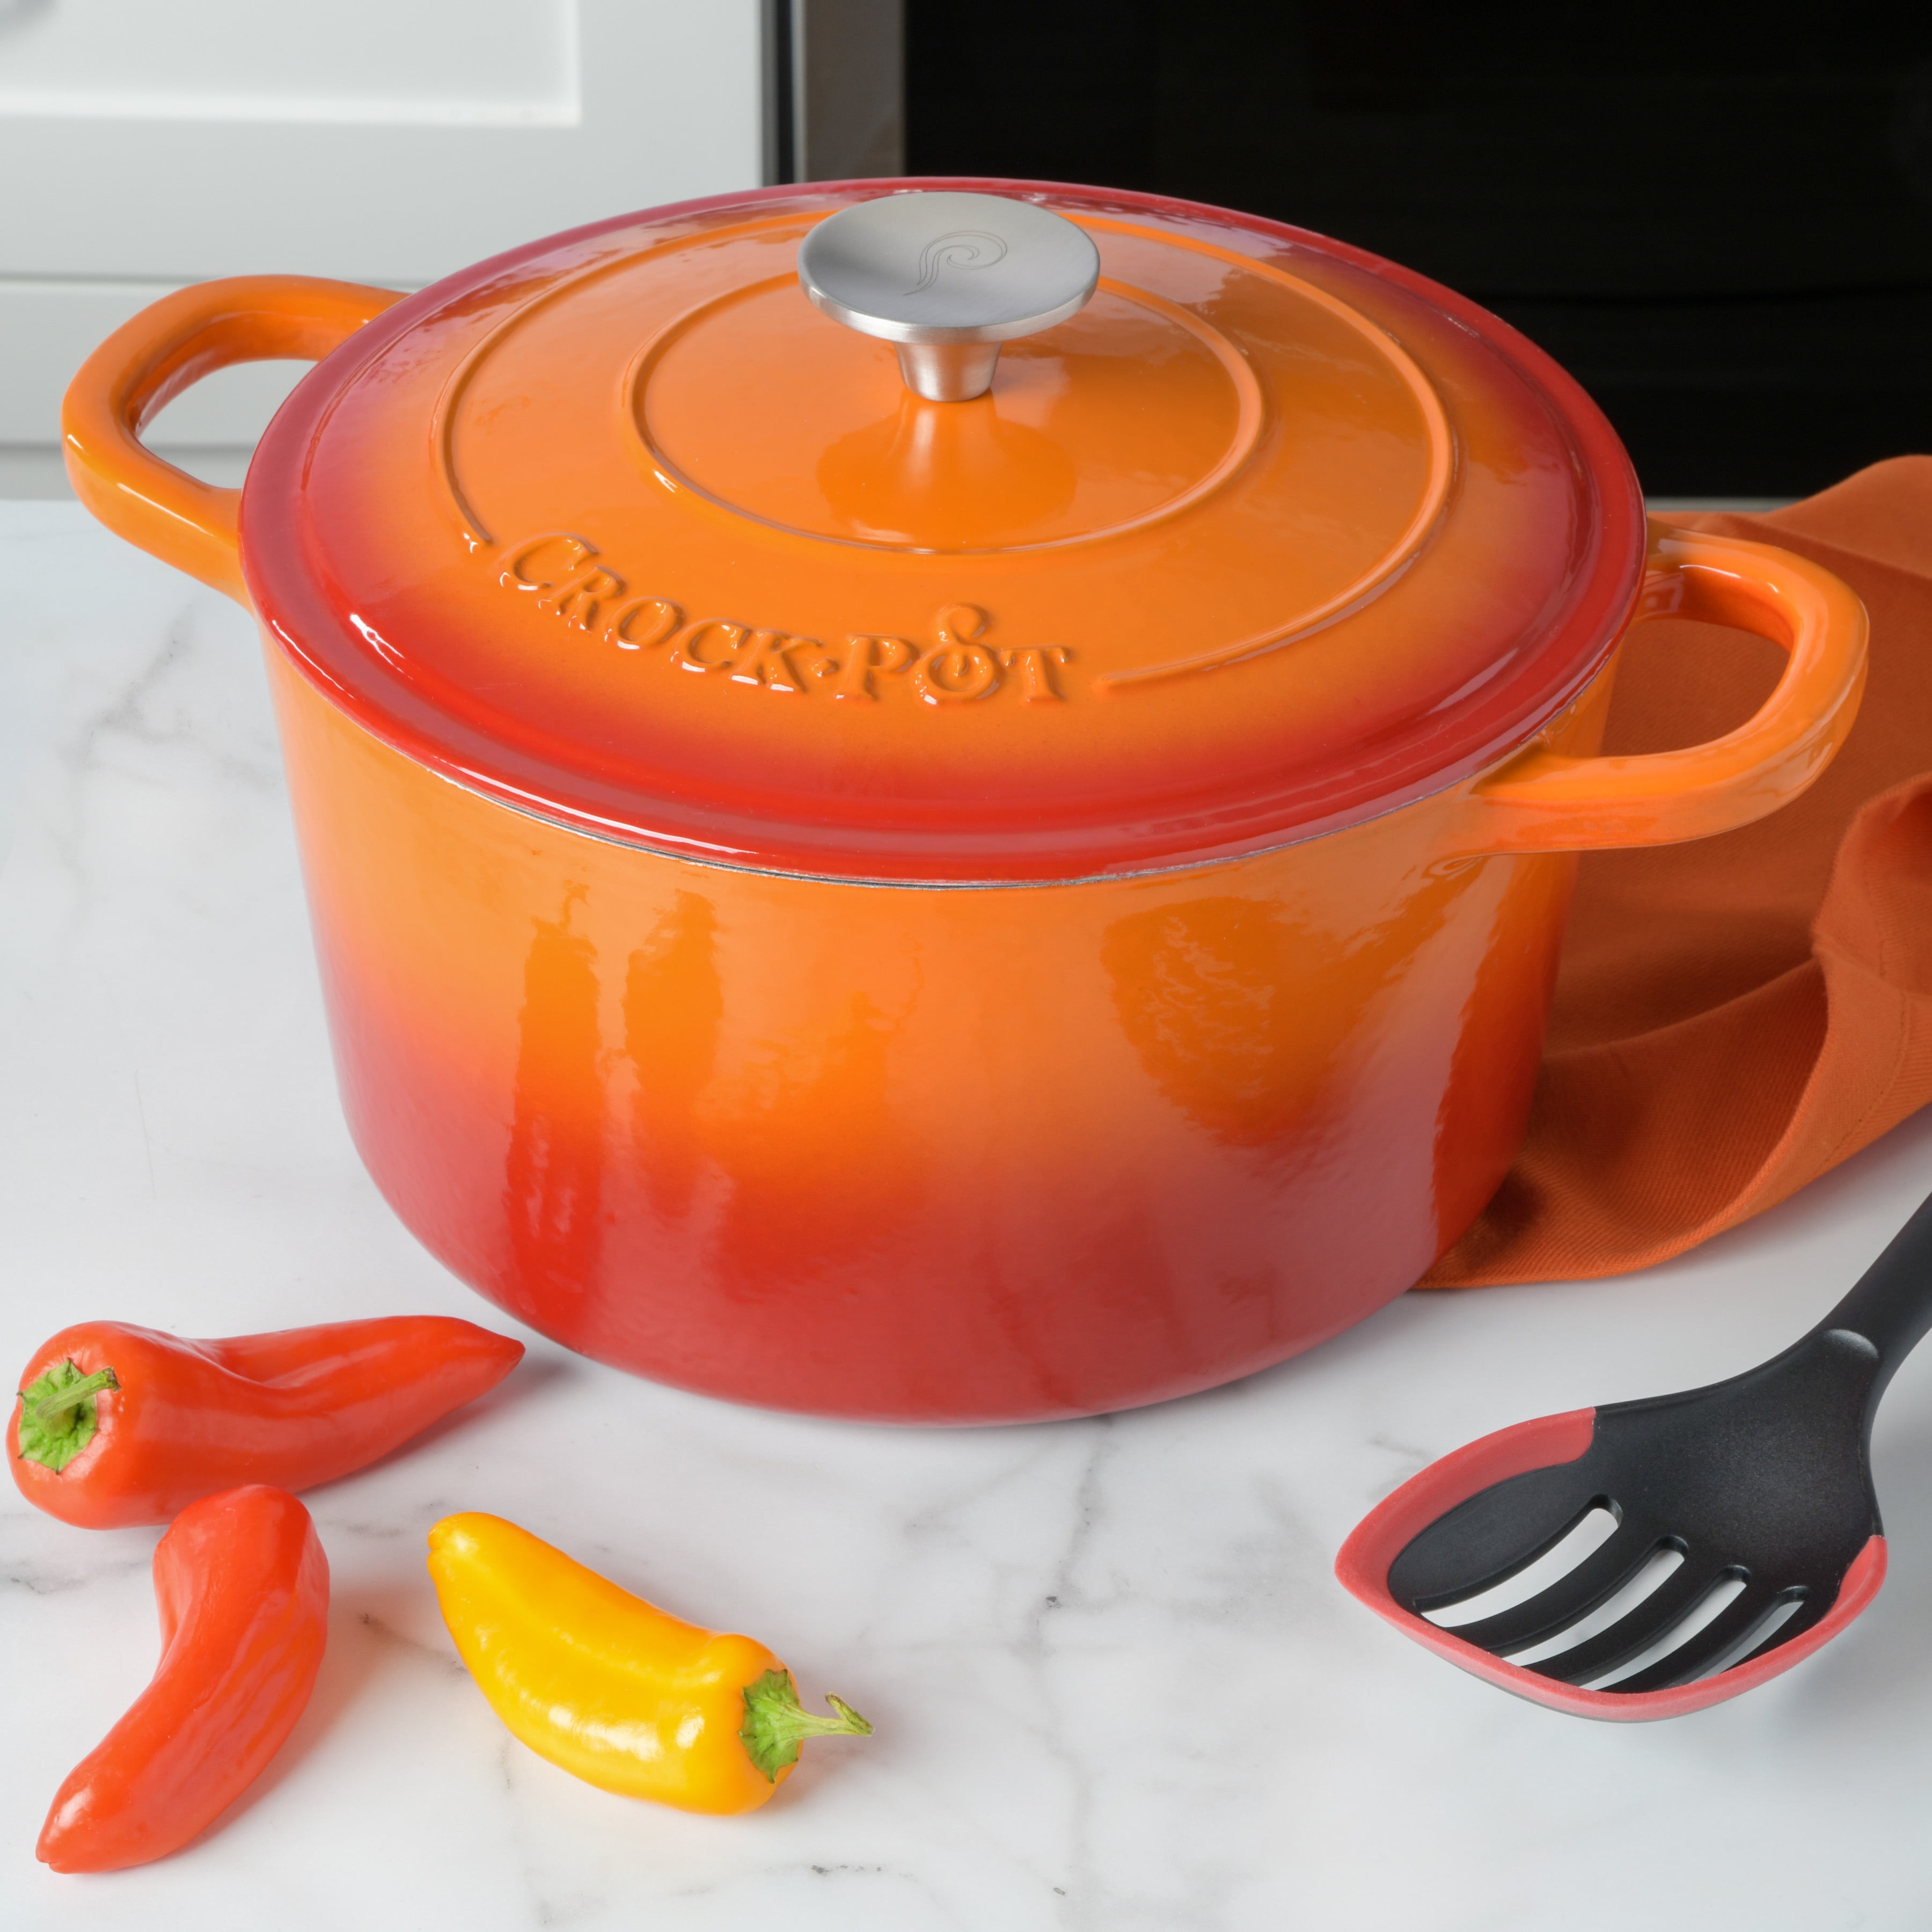 Crock Pot Artisan Oval Enameled Cast Iron Dutch Oven, 7-Quart, Sunset Orange